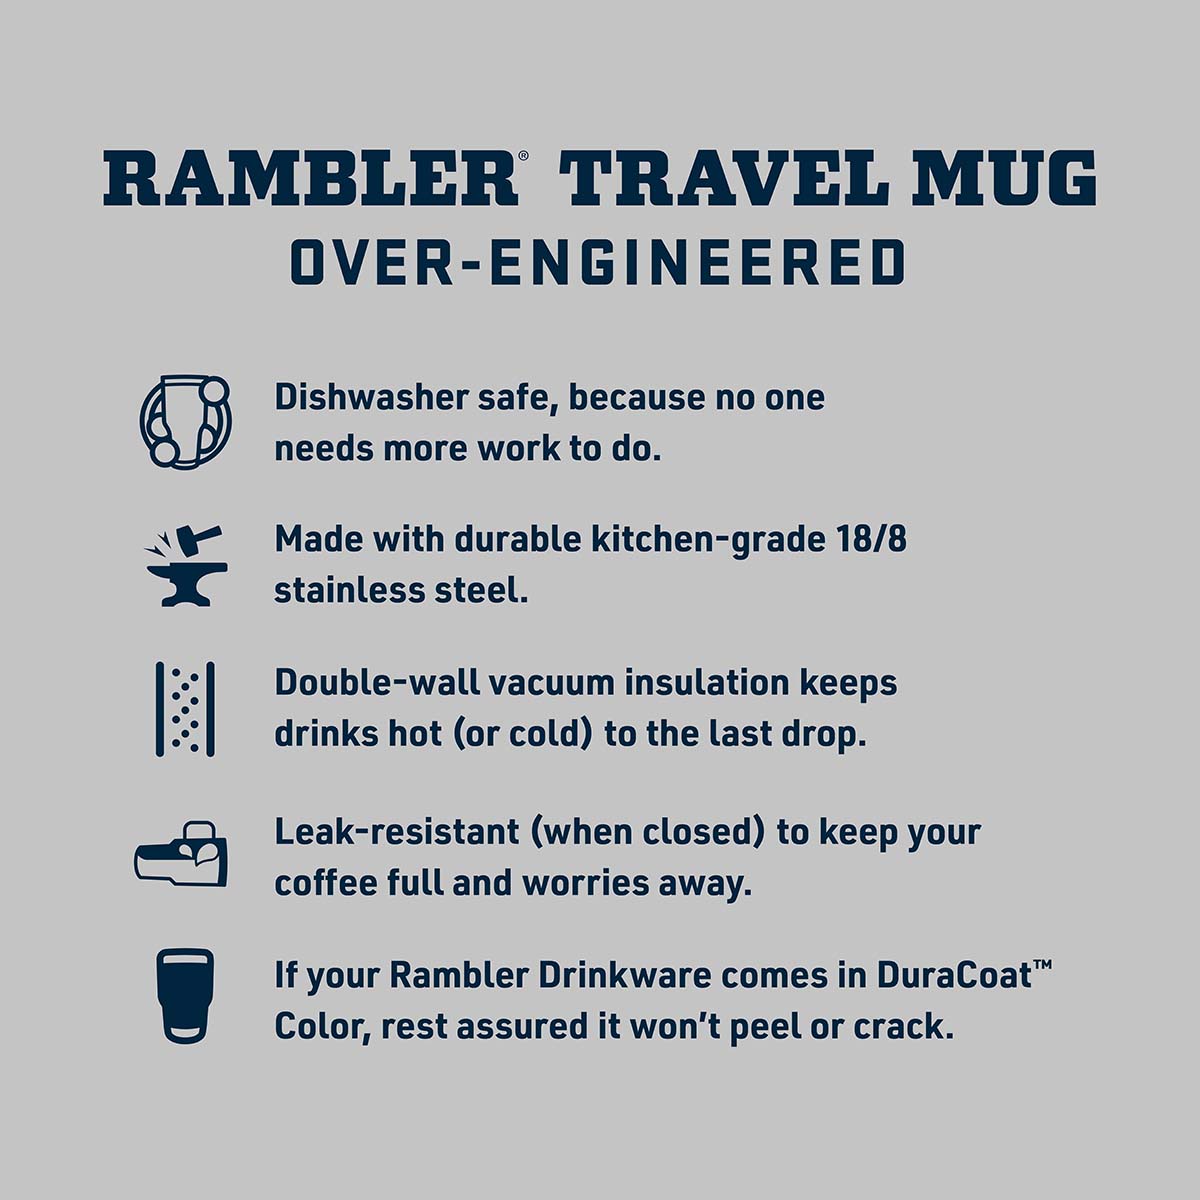 YETI Rambler 30 oz. Travel Mug - Harvest Red - TackleDirect